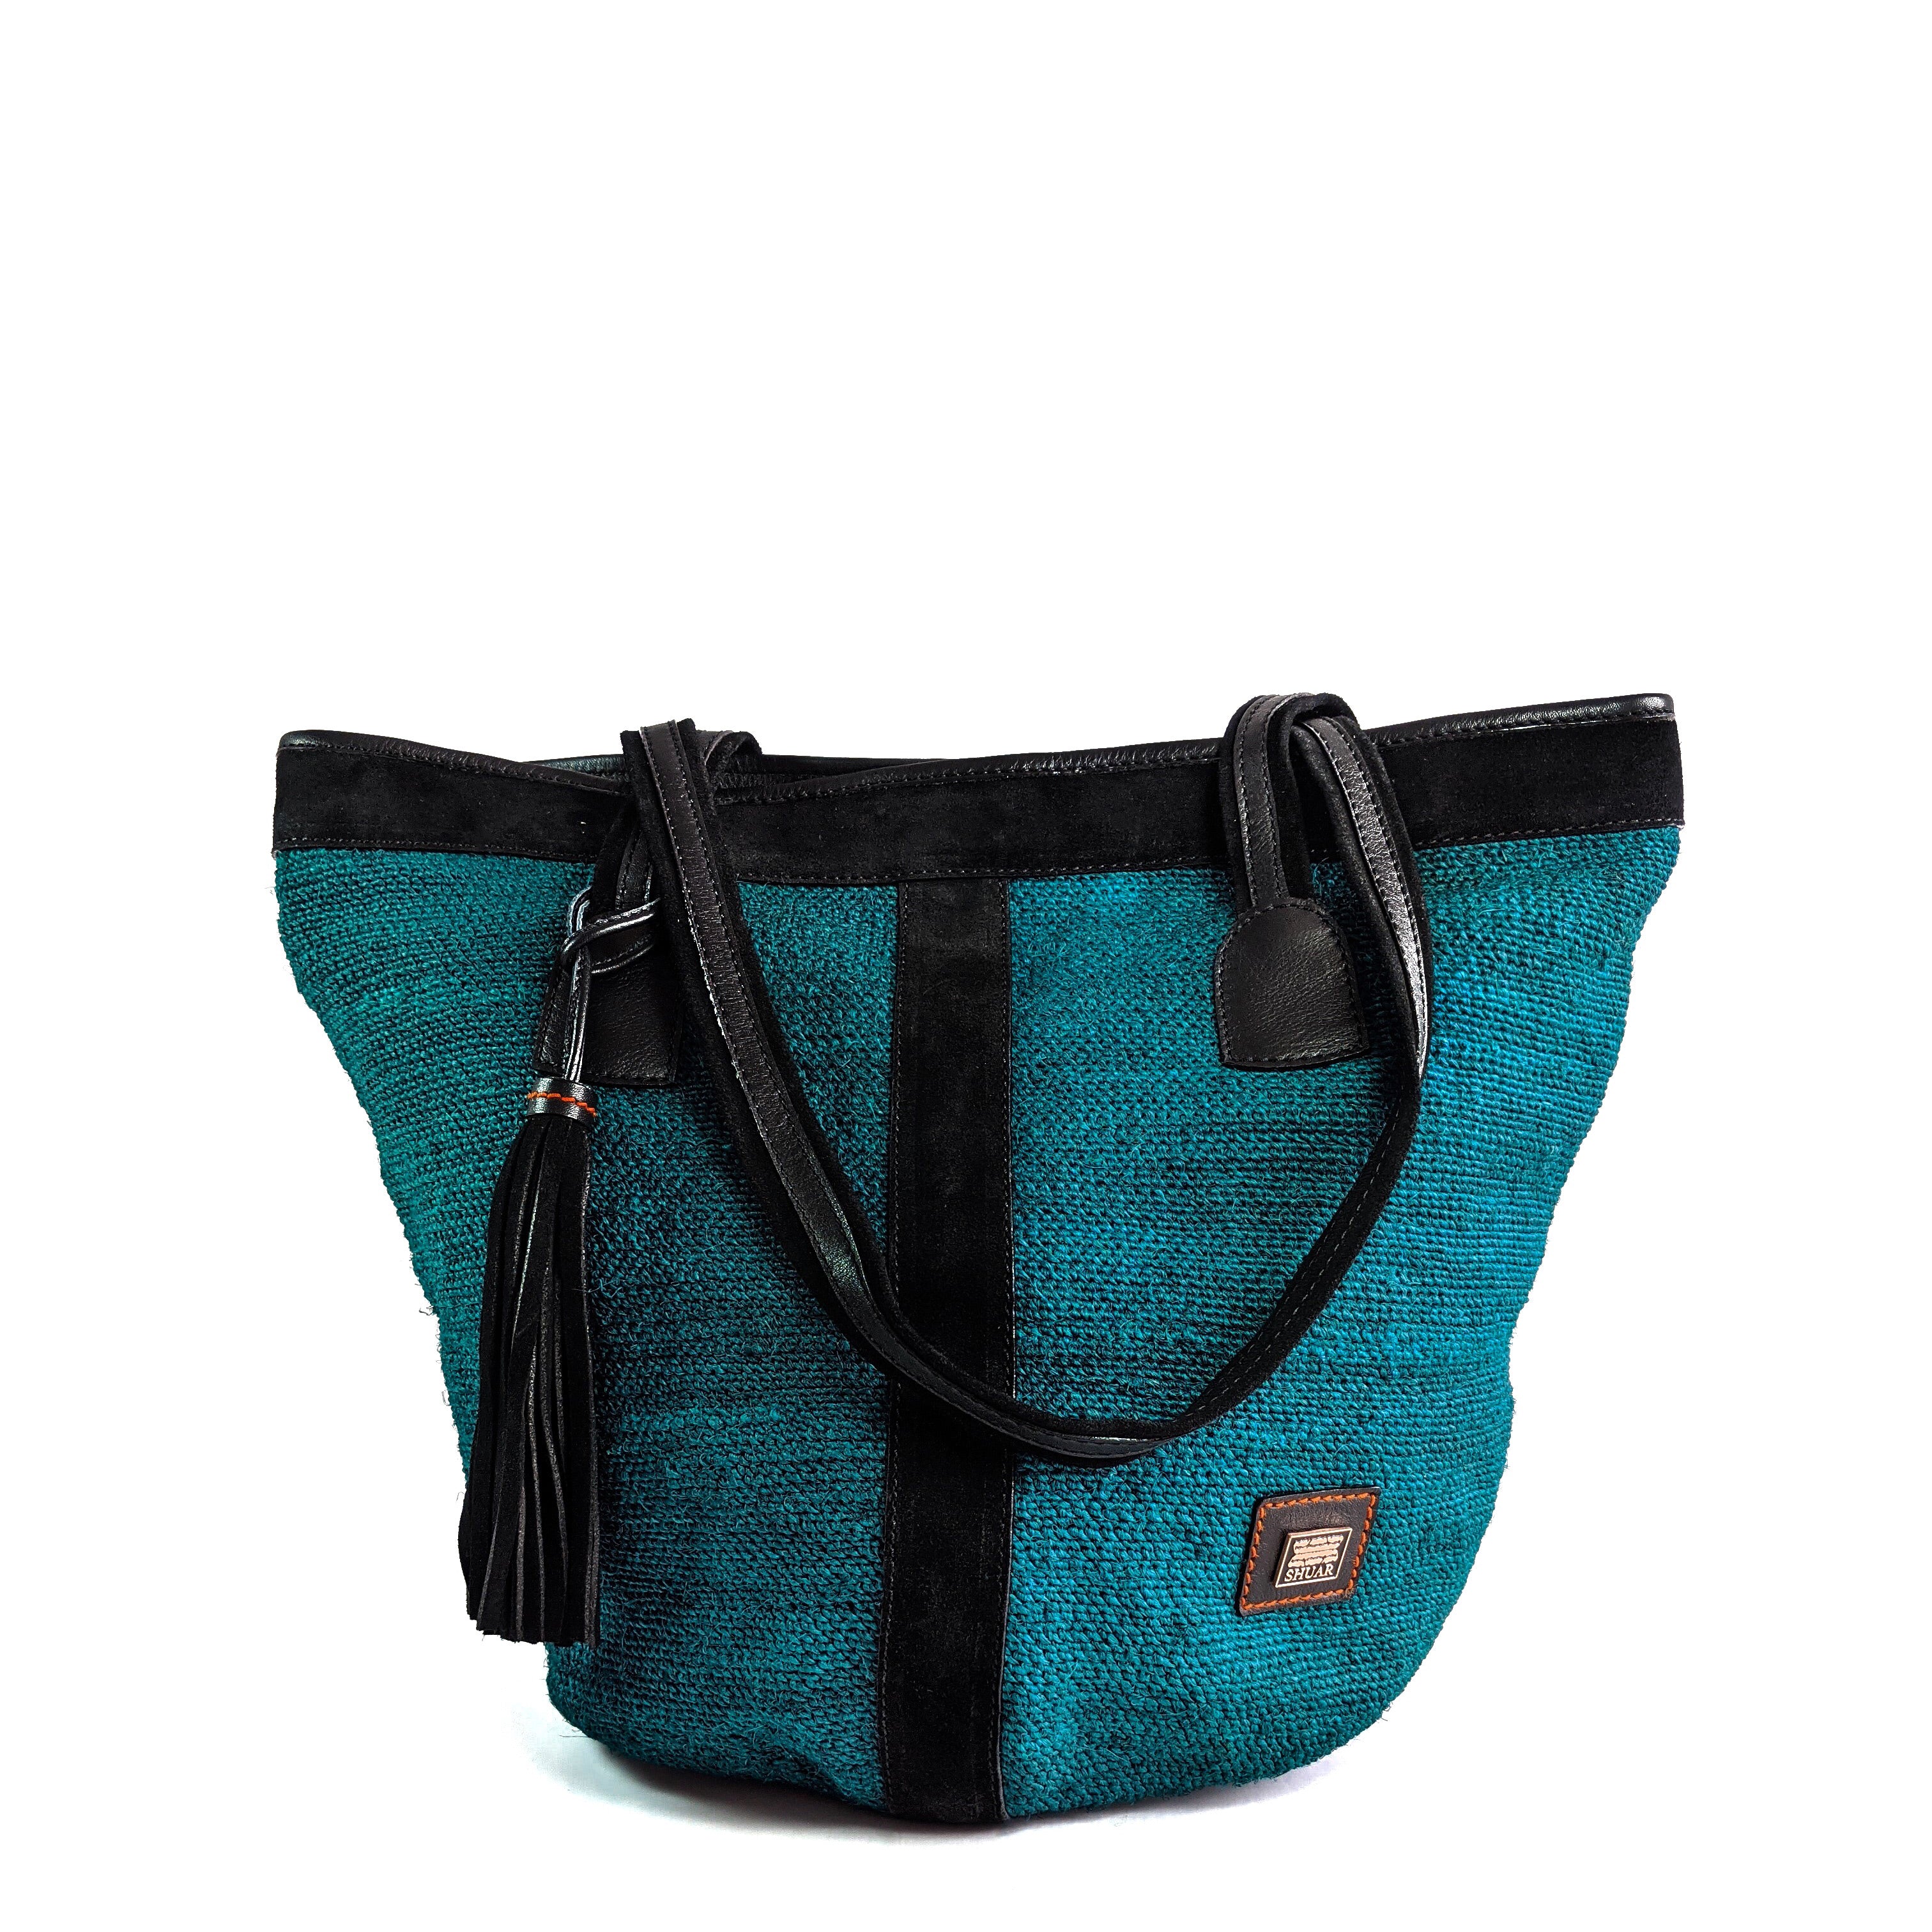 Shoulder Bag Tote Bag Summer Style Handloom Fabric Casual Ceylon Brand New  | eBay